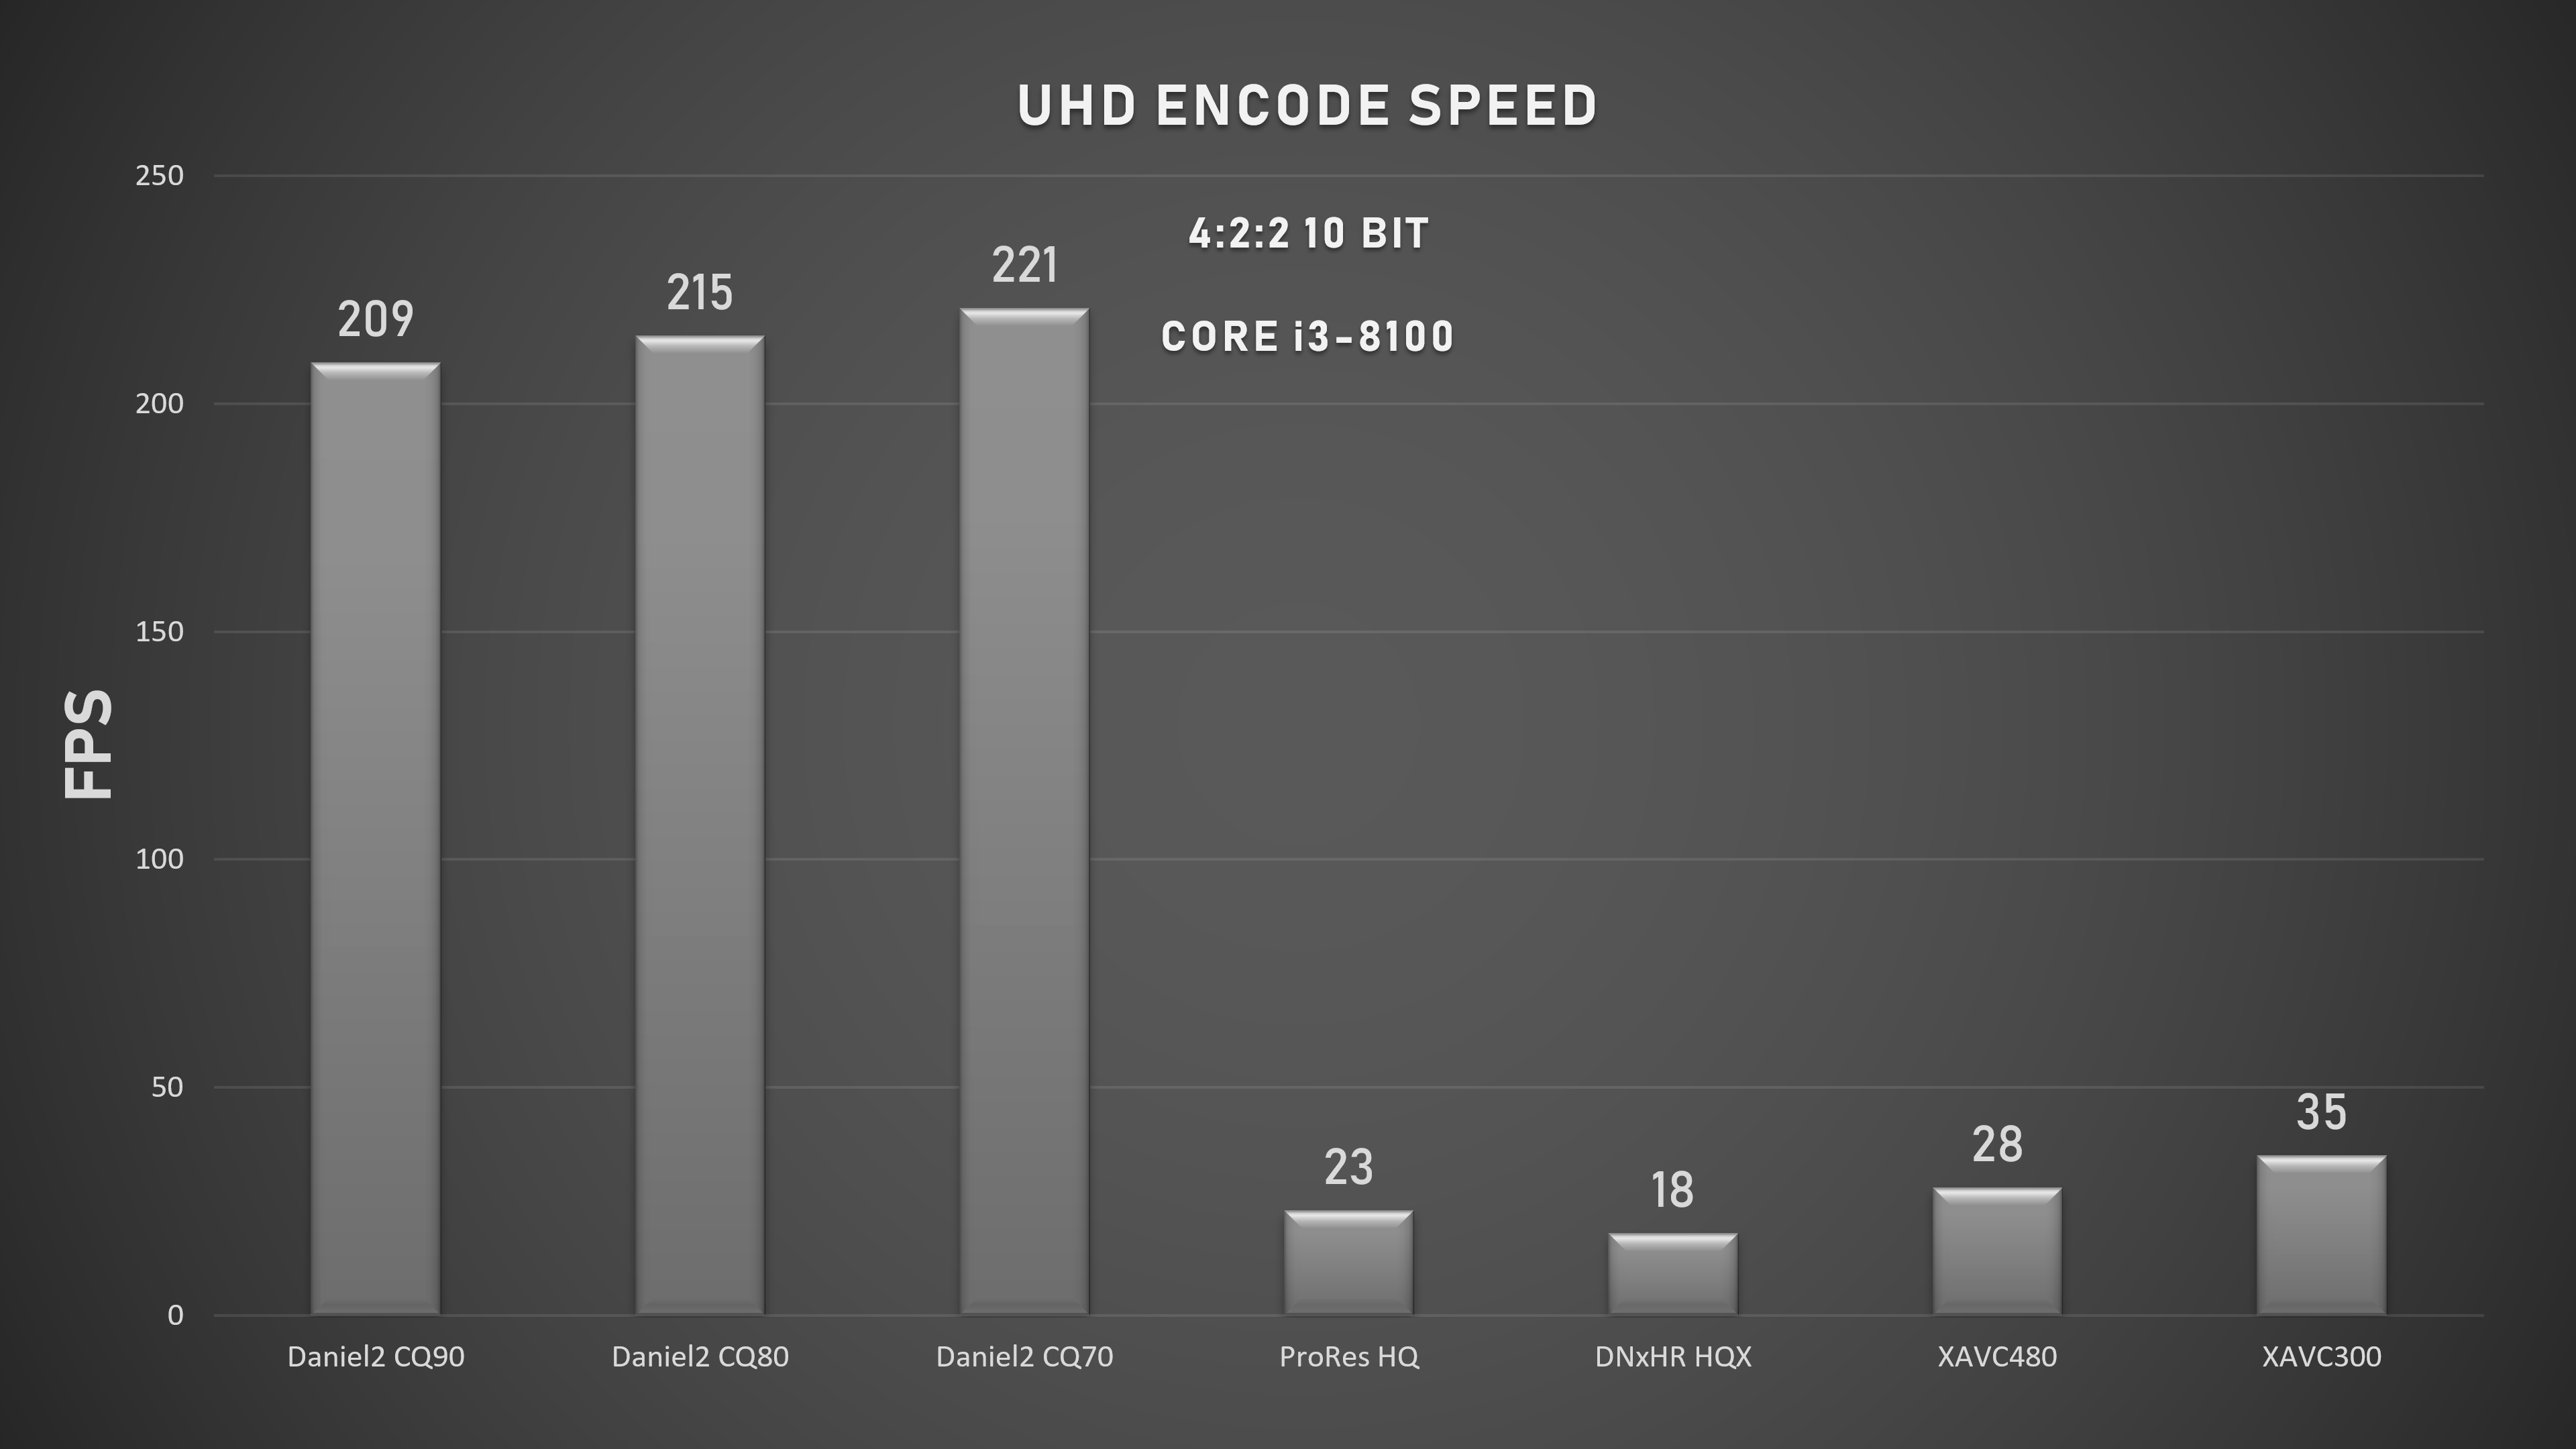 Daniel2 vs Other Codecs CPU UHD 4:2:2 10bit FPS Encode